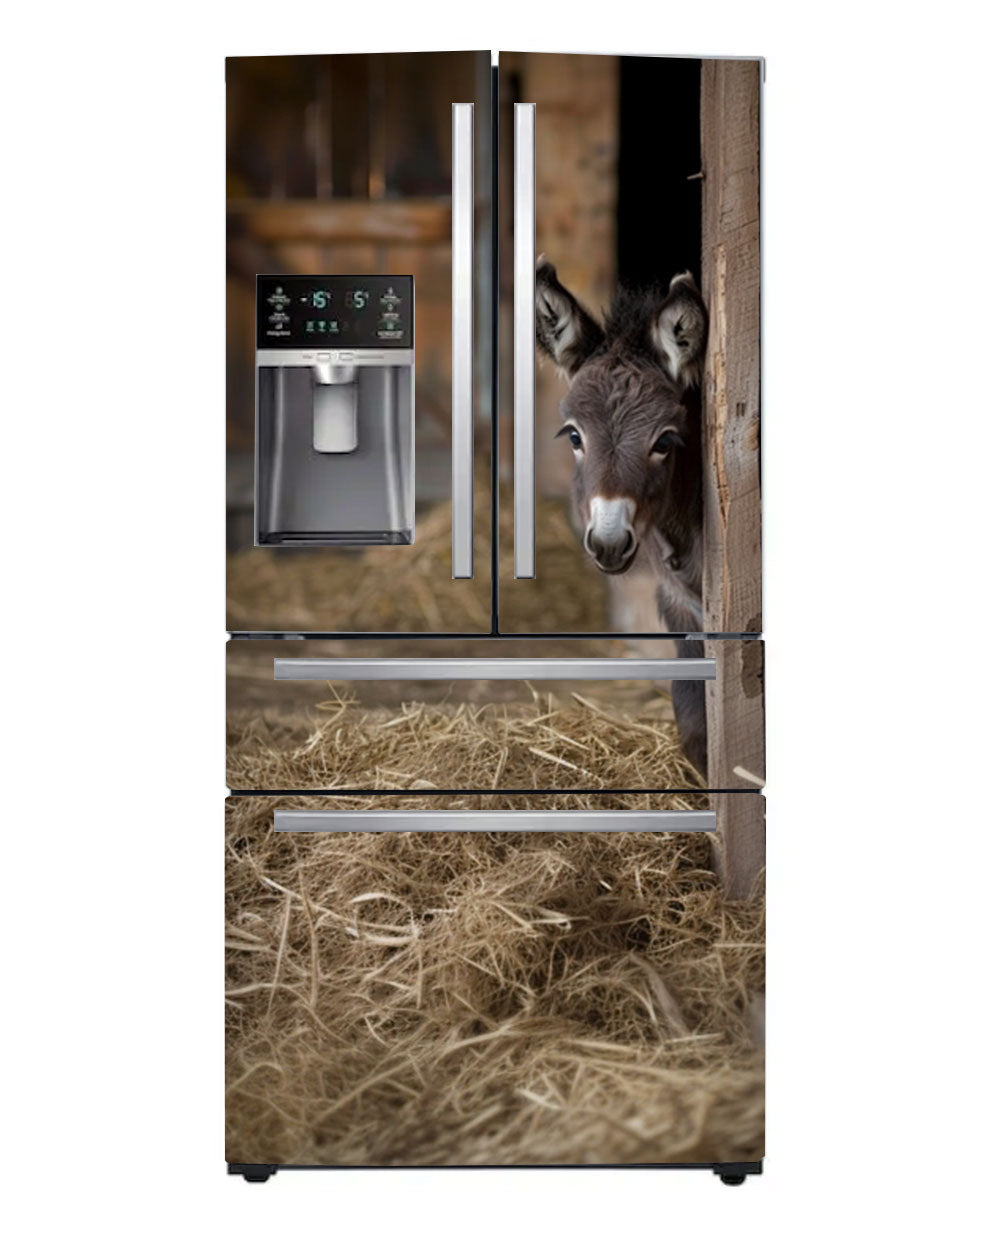 Donkey in the barn